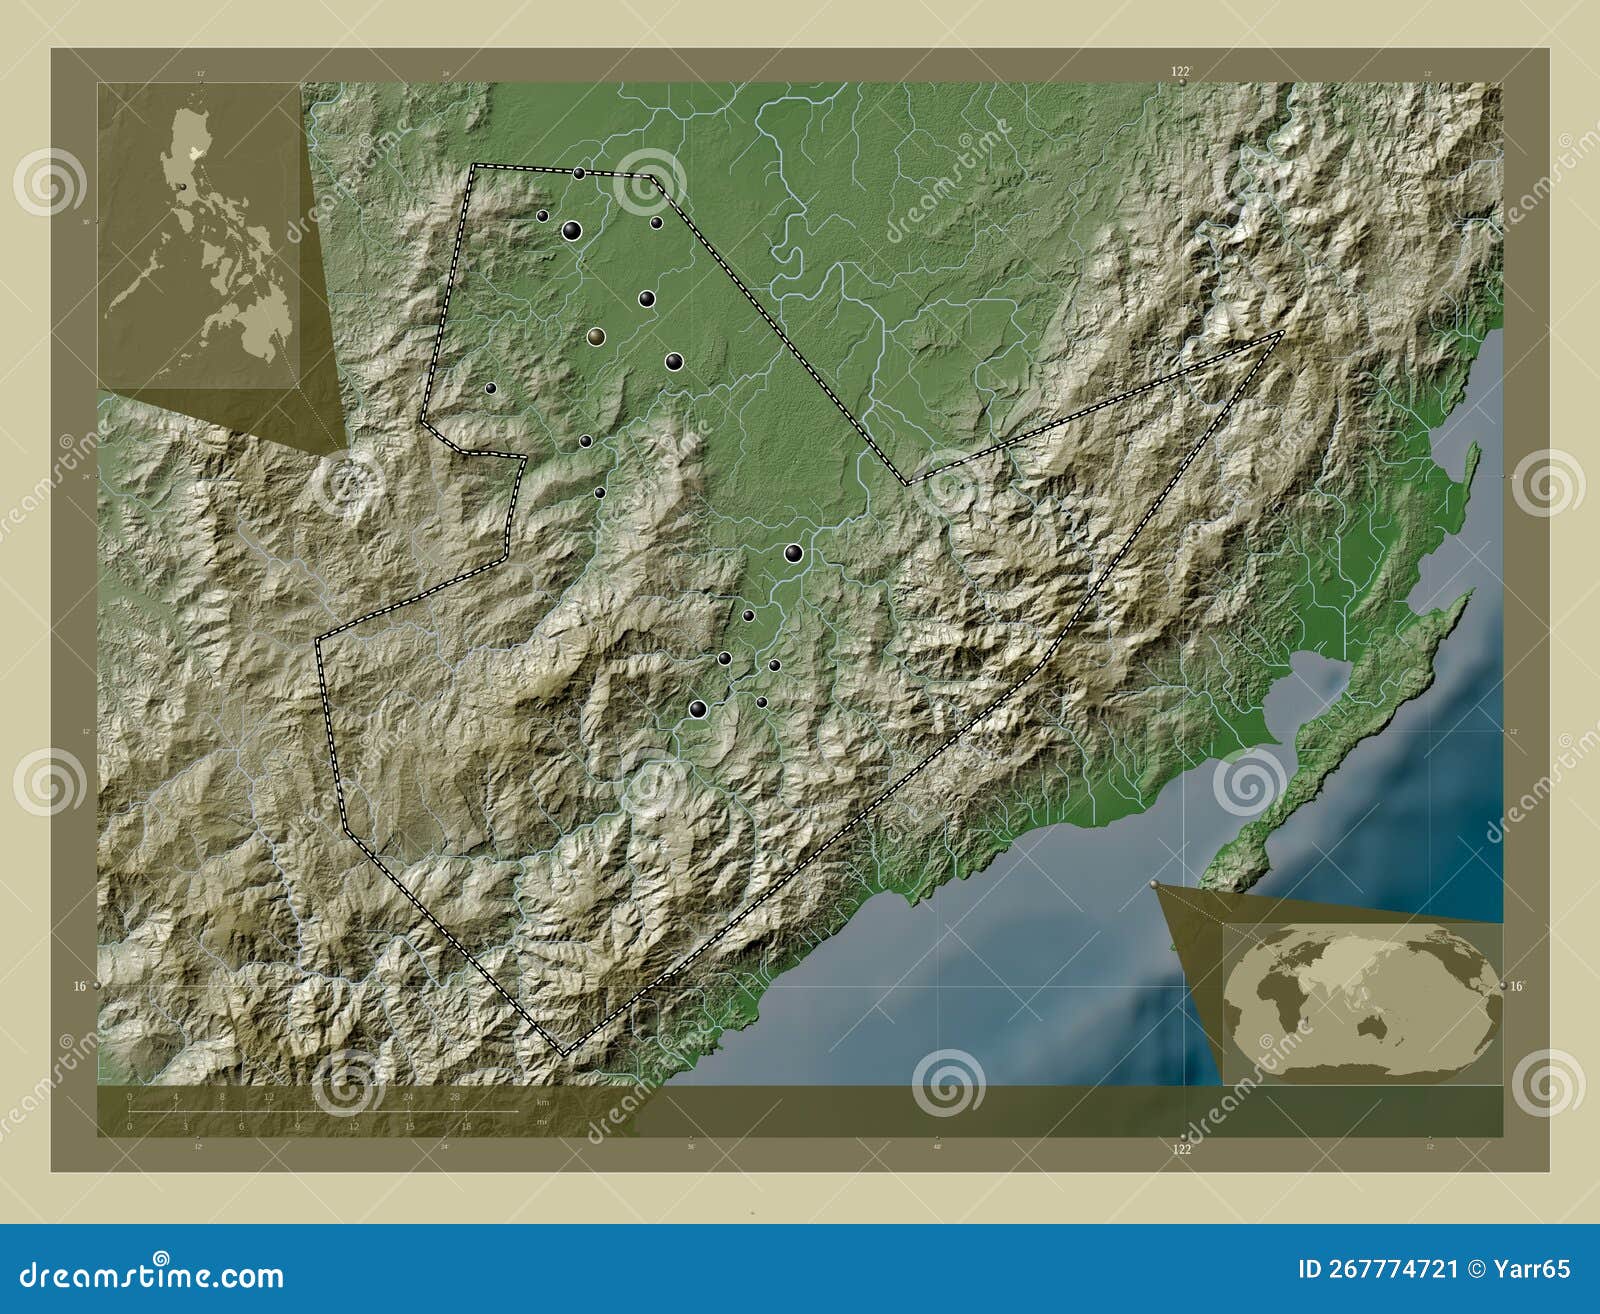 Quirino Philippines Wiki Major Cities Stock Illustration